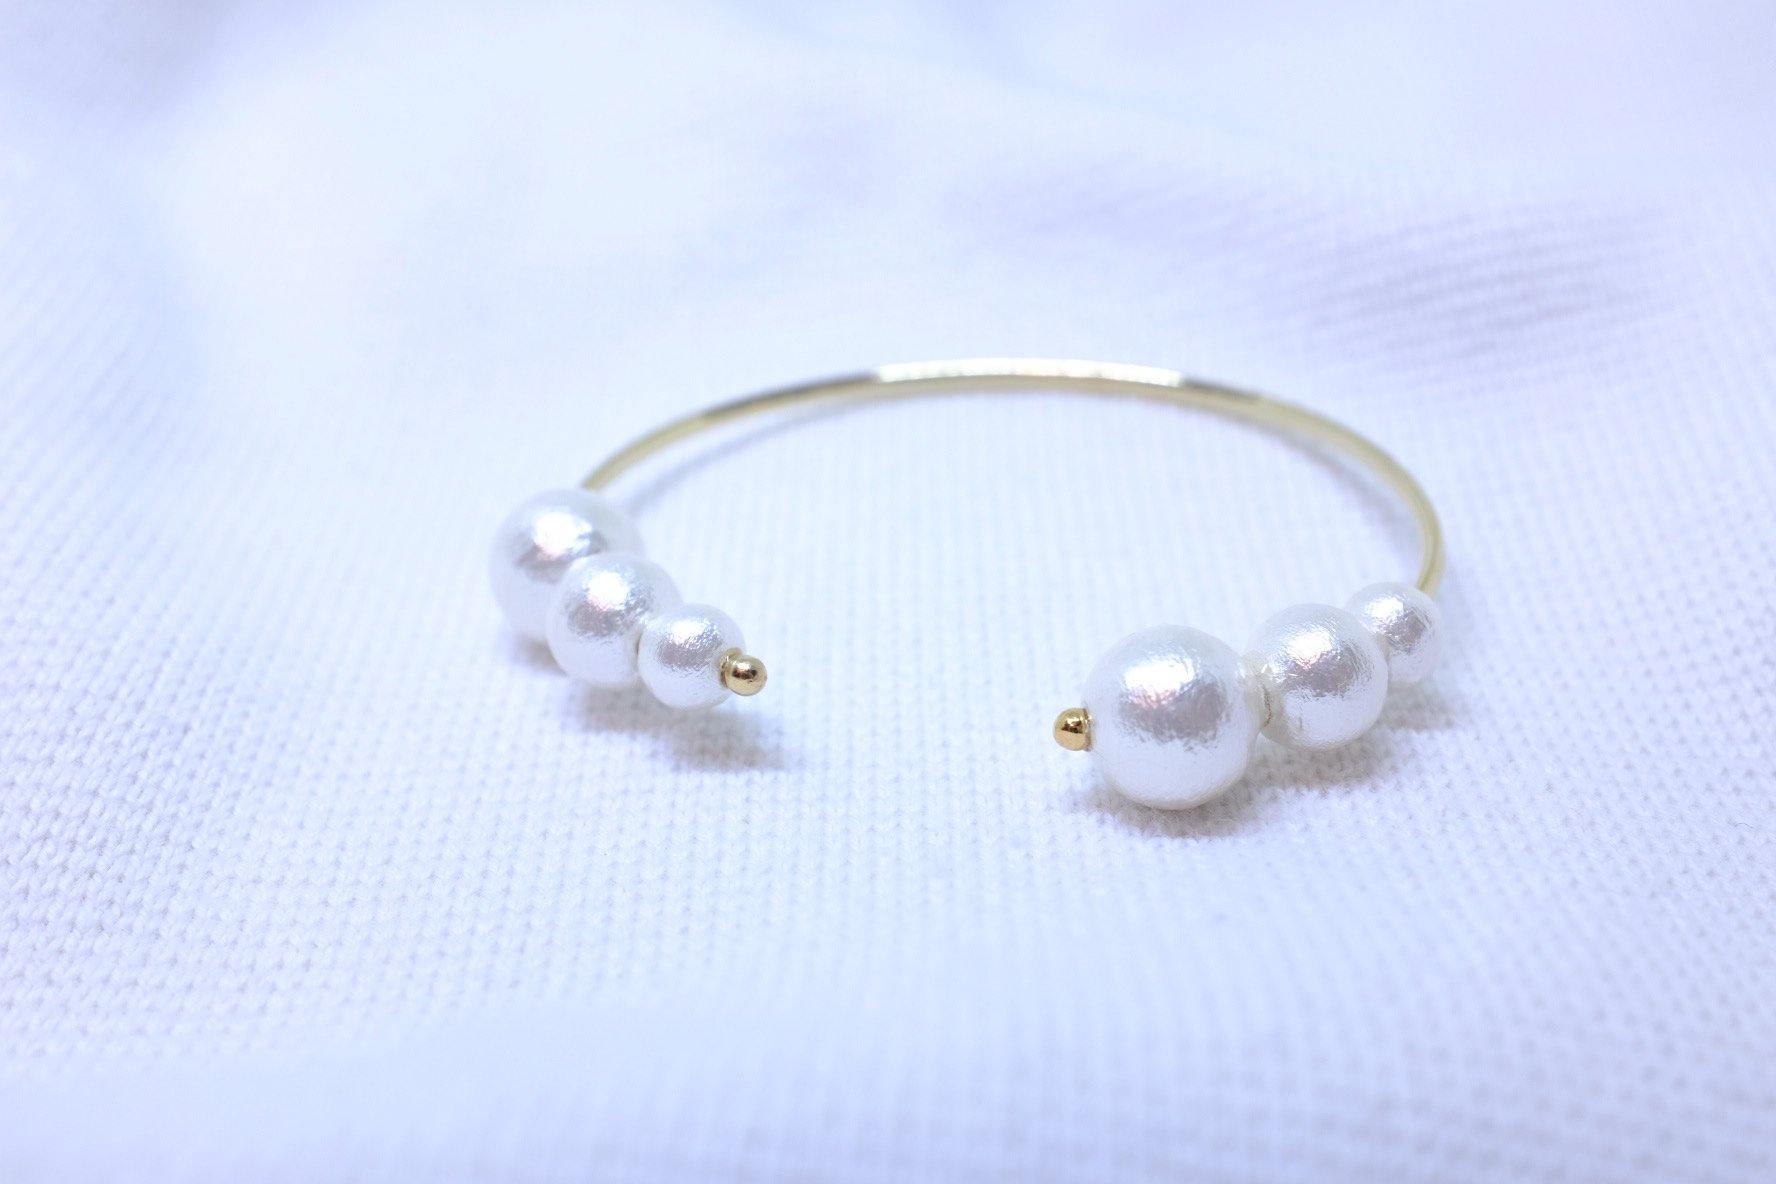 <The Pearl> Yin Yang wrist cuff - MMW Concept